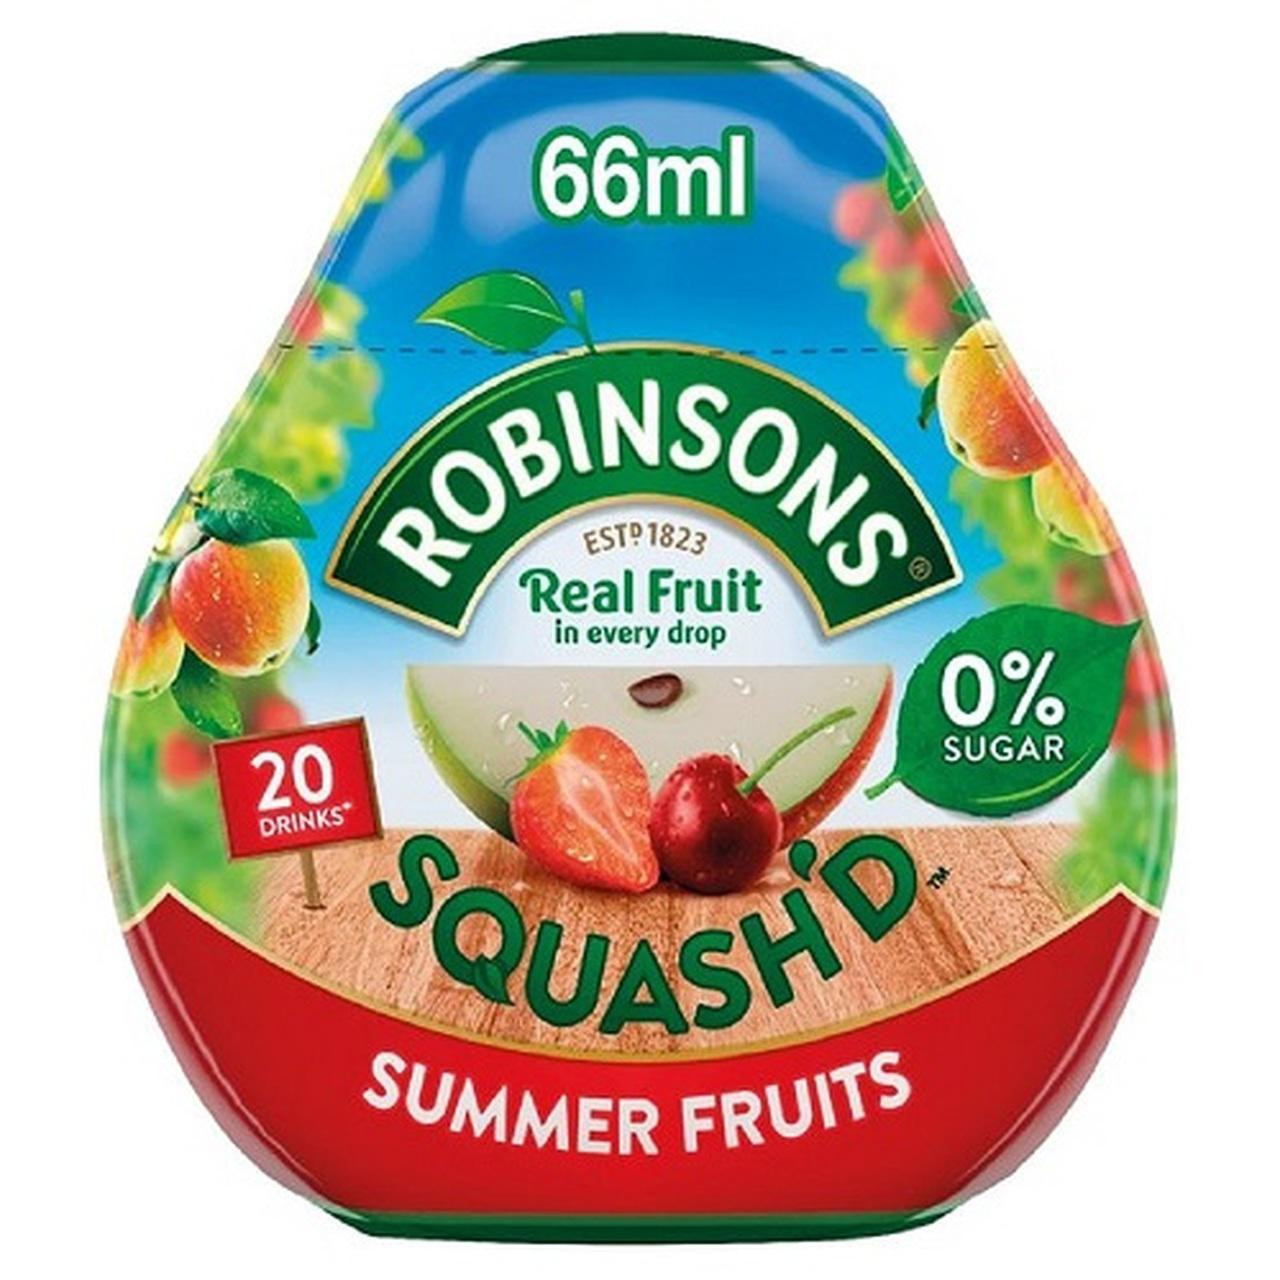 Robinsons Squash'd - Summer Fruits, 66 ml